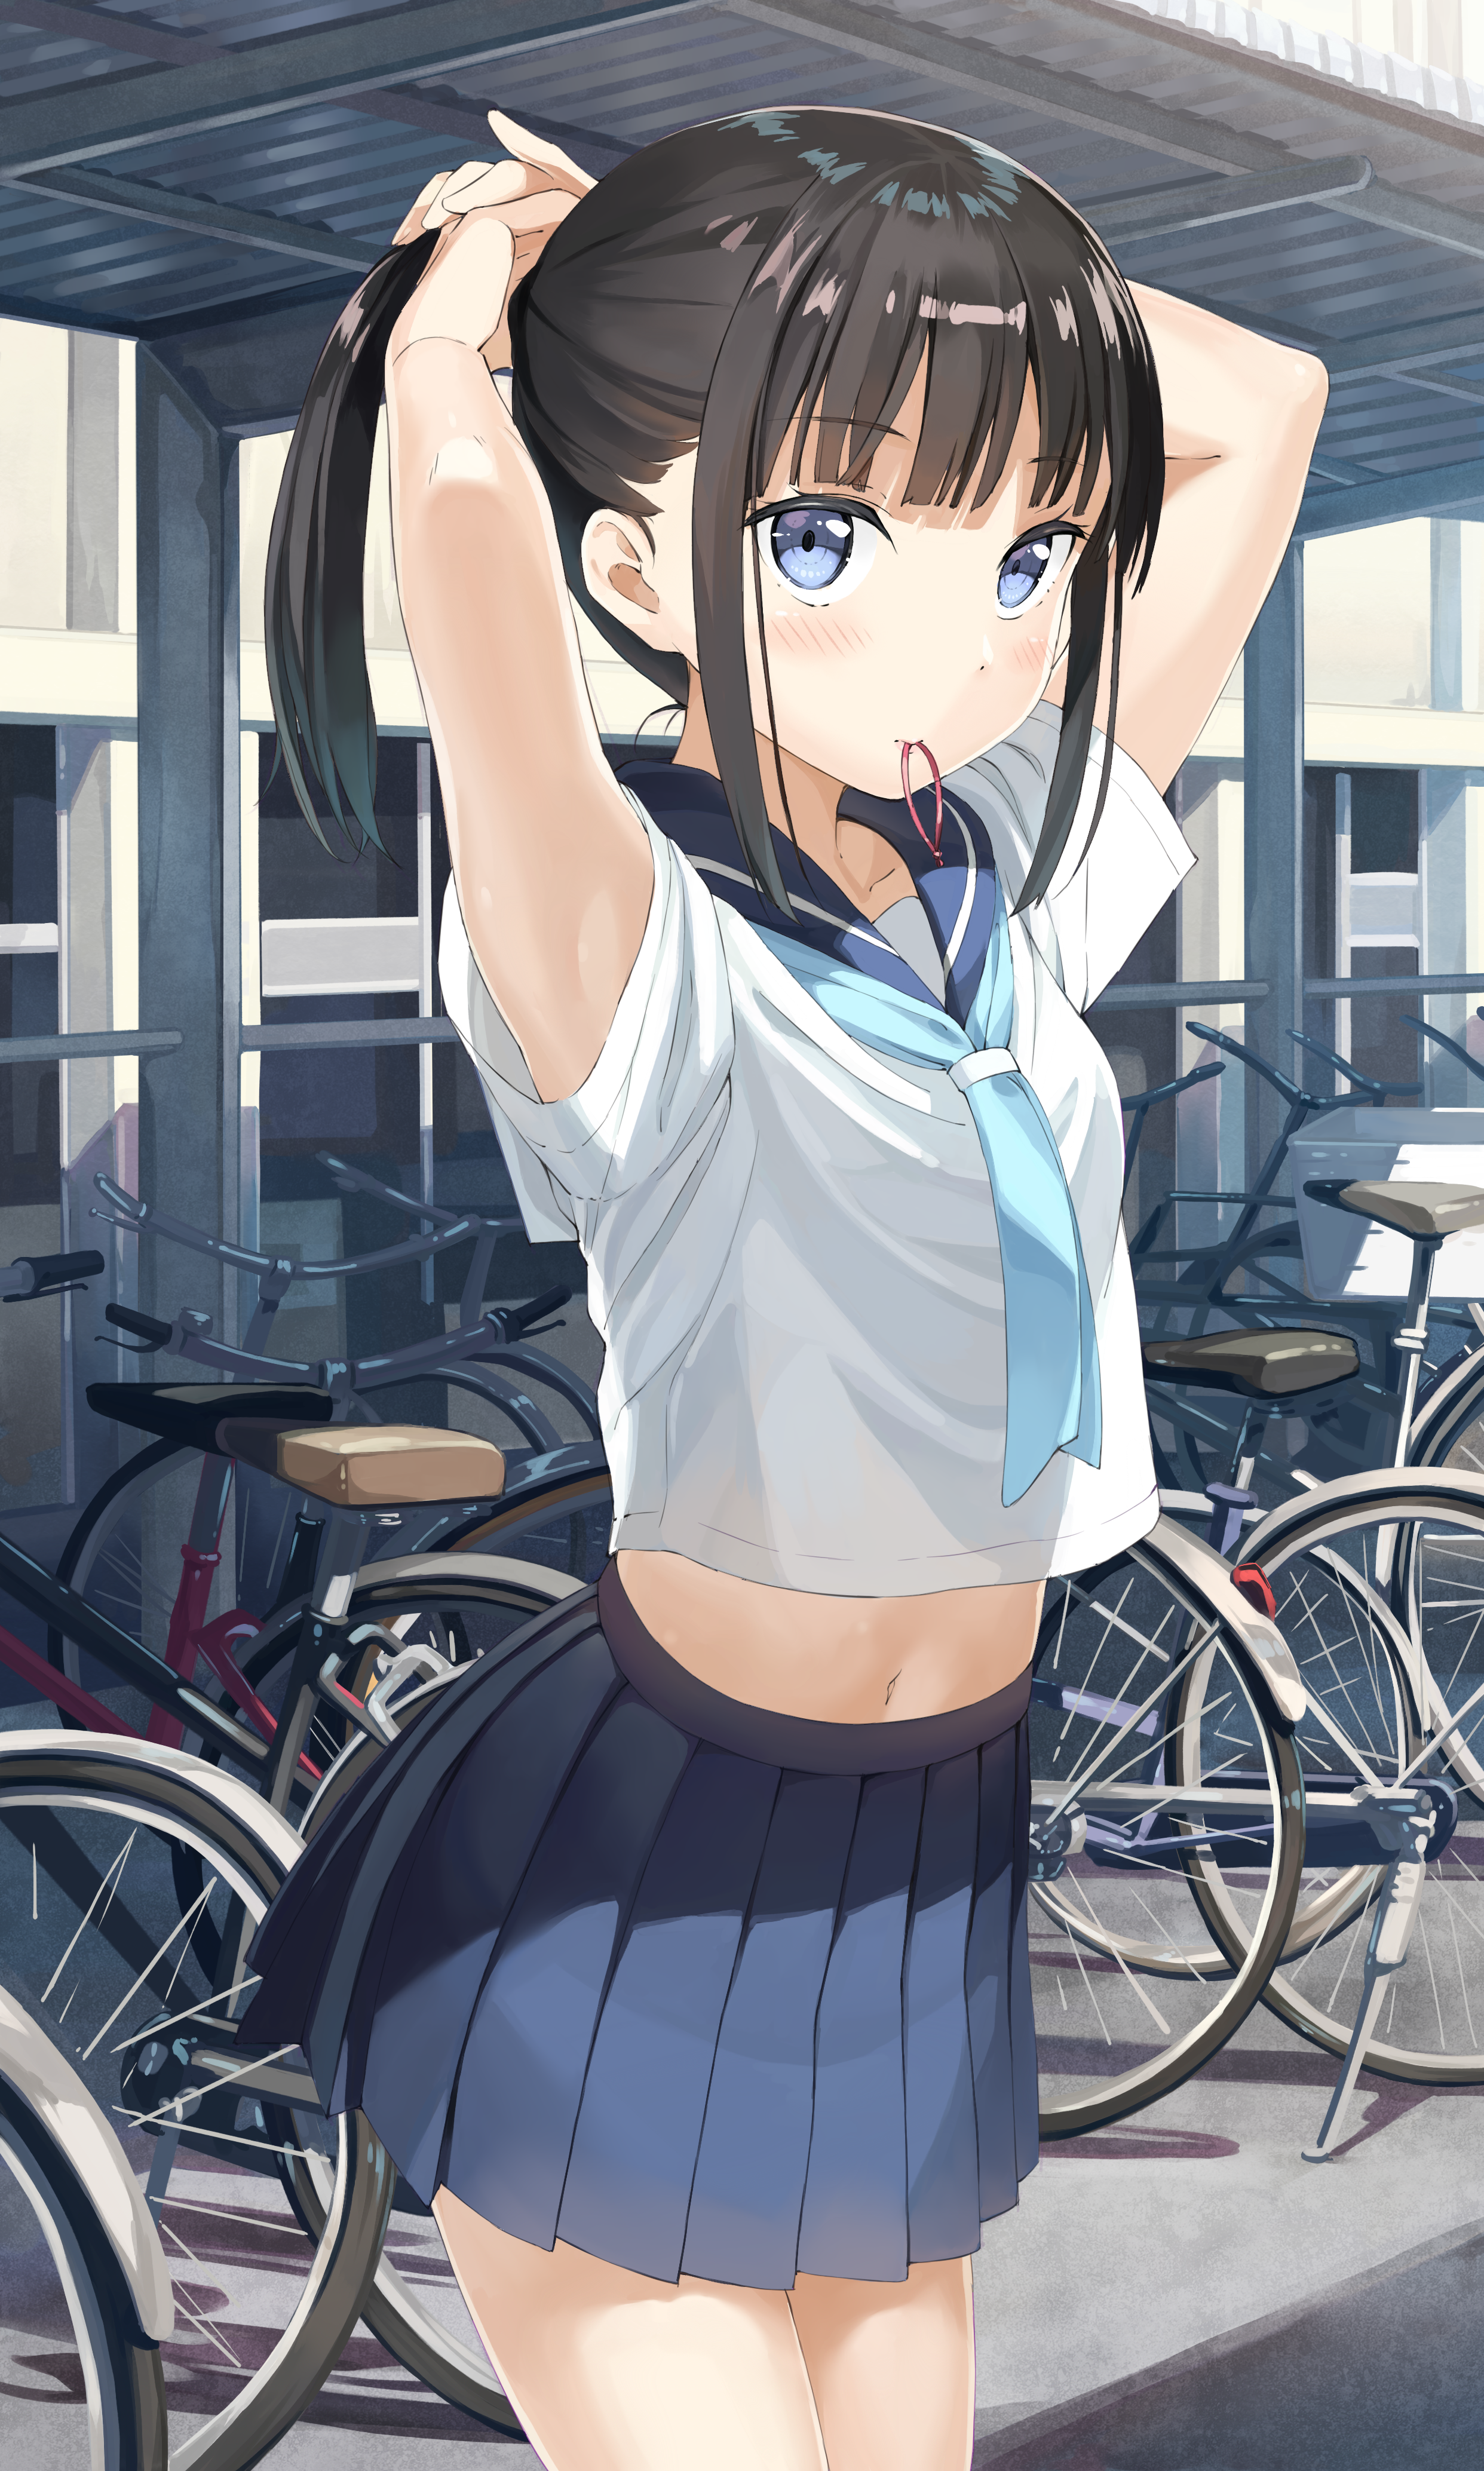 Anime Girls School Uniform Schoolgirl Skirt Arms Up Anime Tie Black Hair Blue Eyes Vehicle Bicycle A 2484x4136